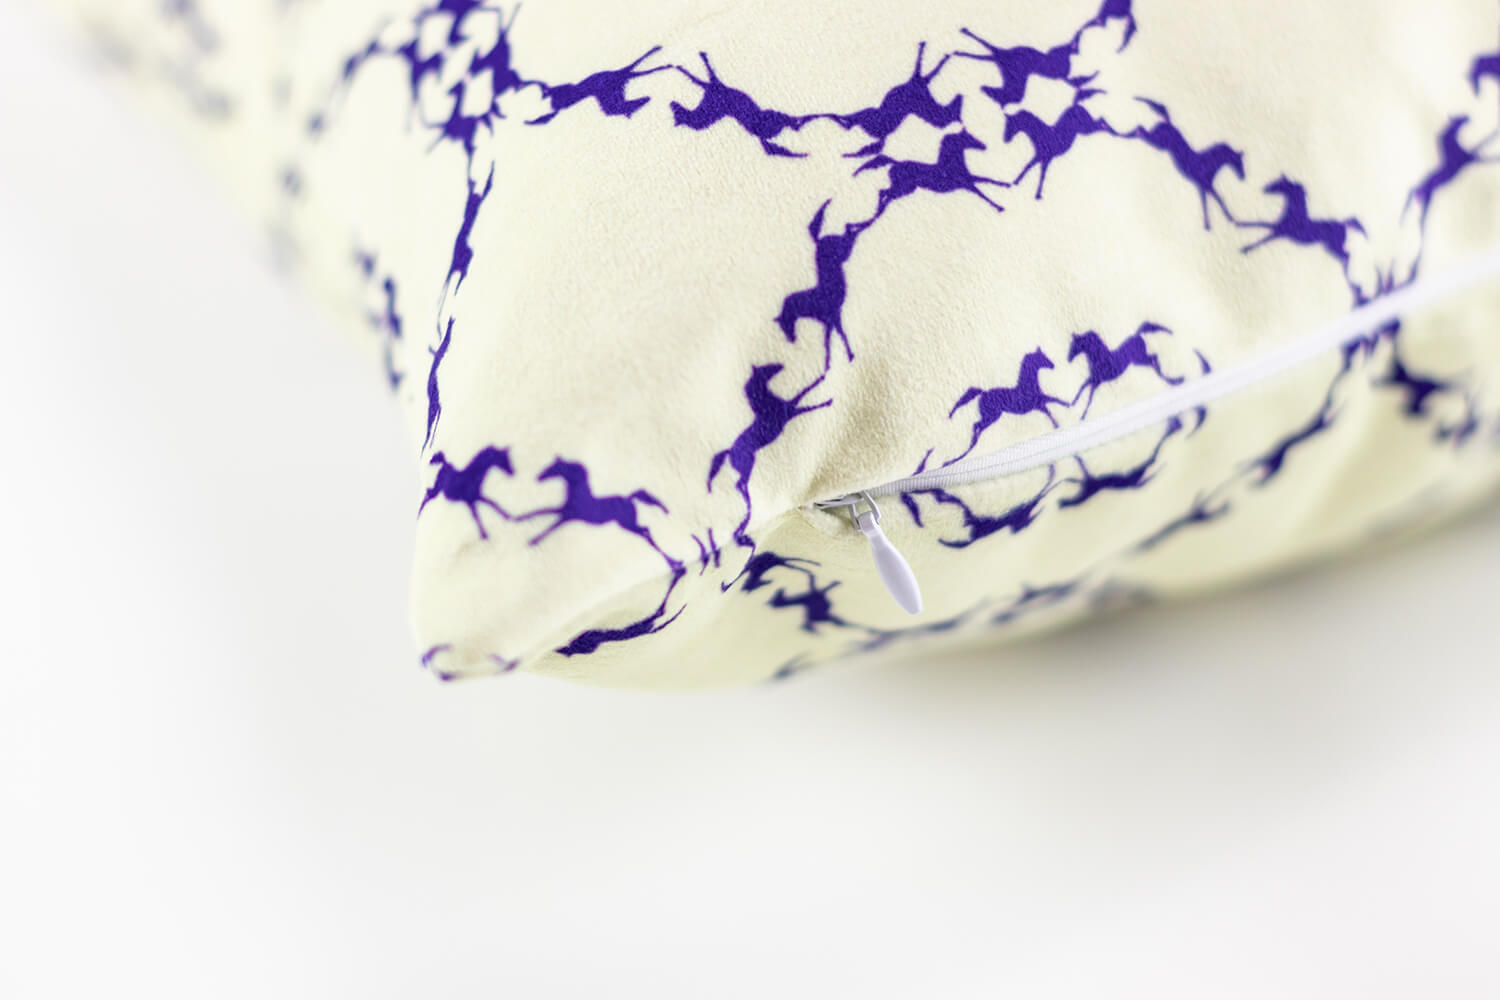 Blue White Porcelain Floral Throw Pillow Covers Vintage